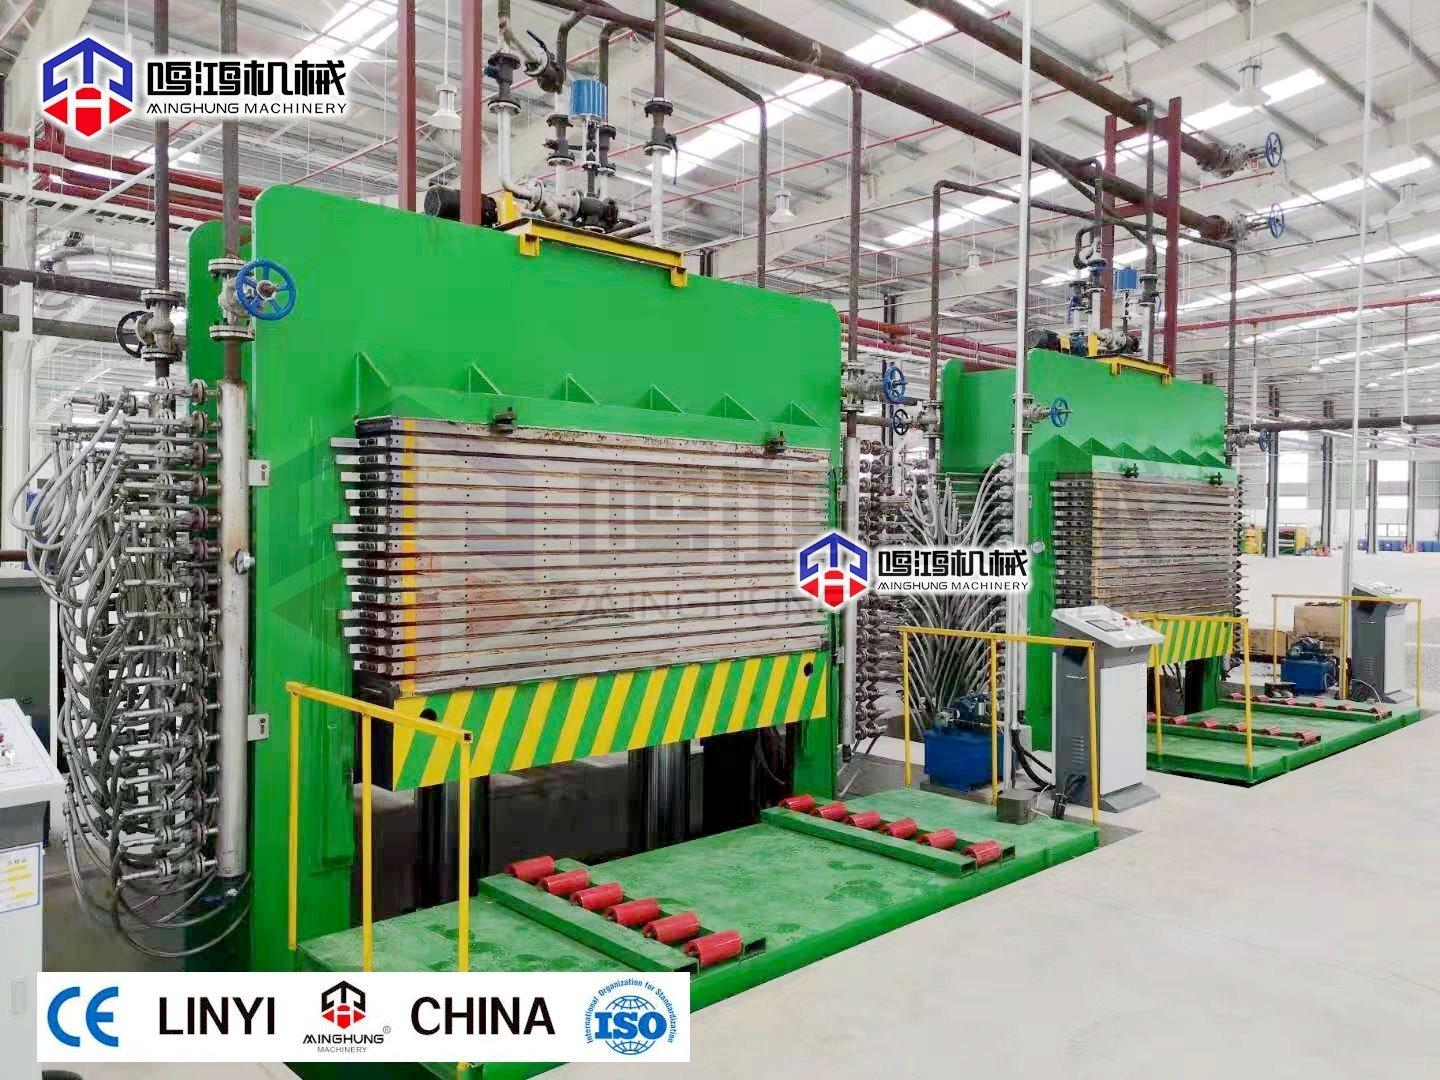 China Supplier Melamine Laminated Hot Press Machine